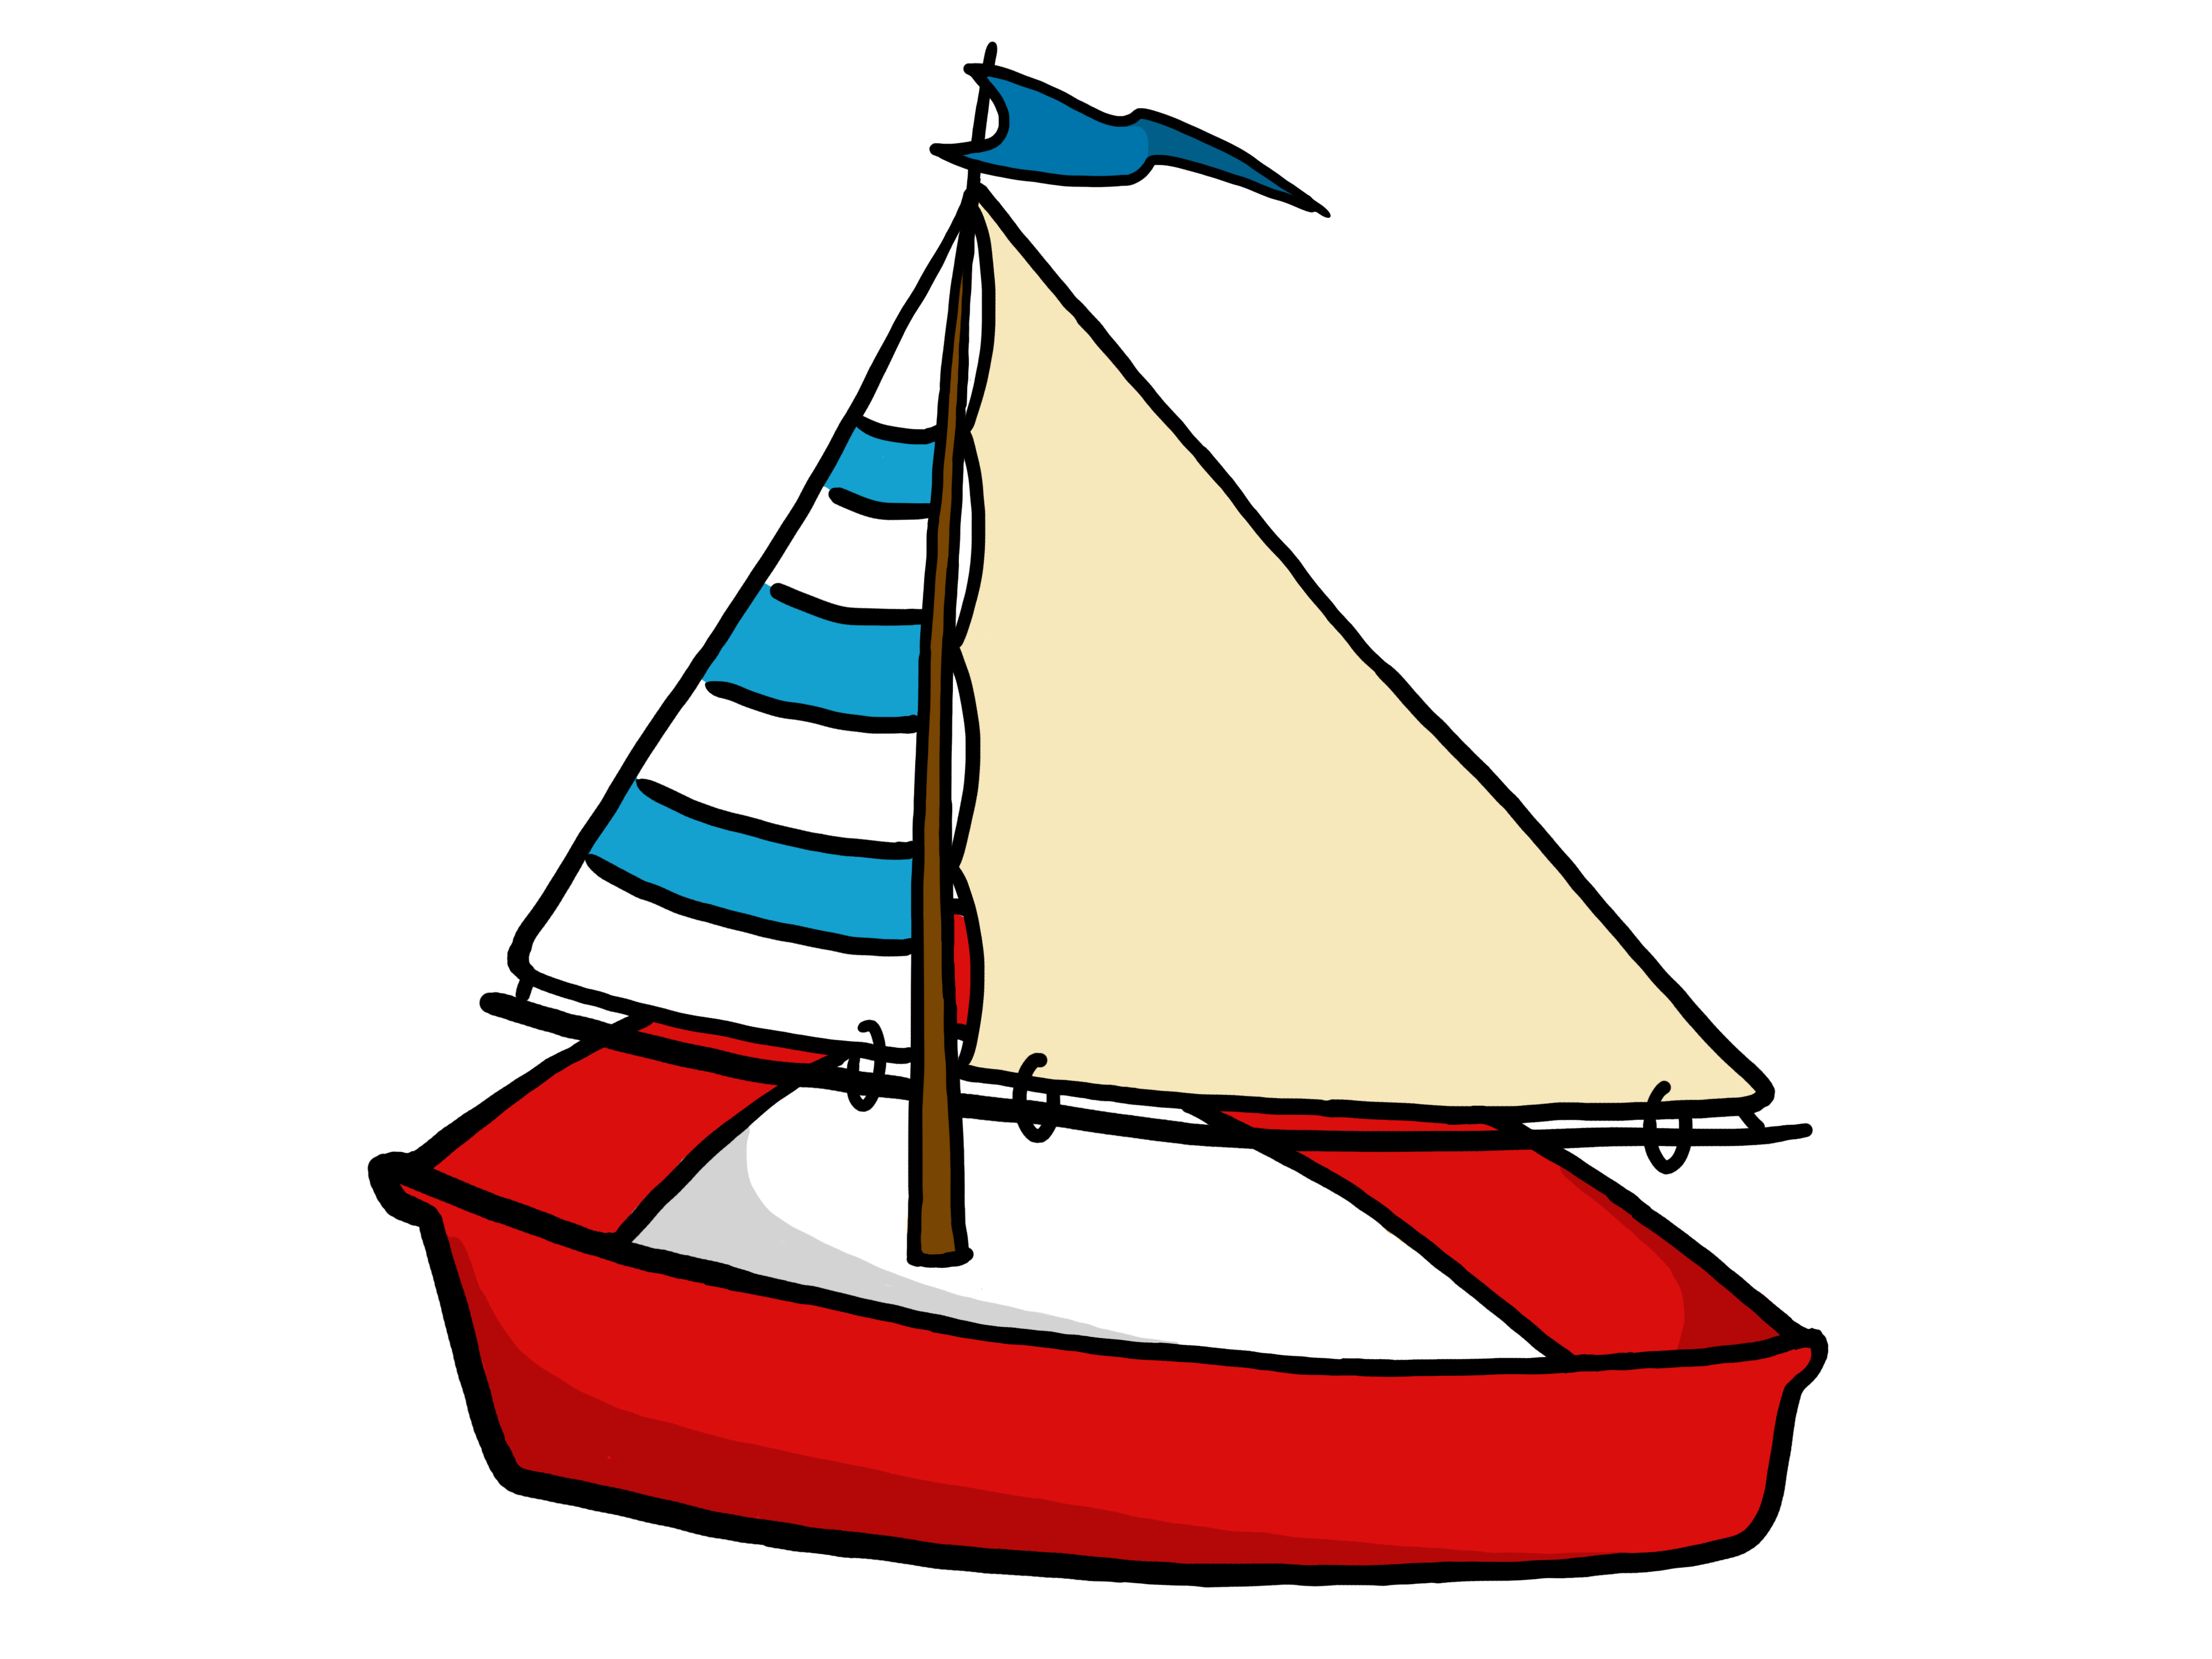 Boat clipart Boat Transparent FREE for download on WebStockReview 2020